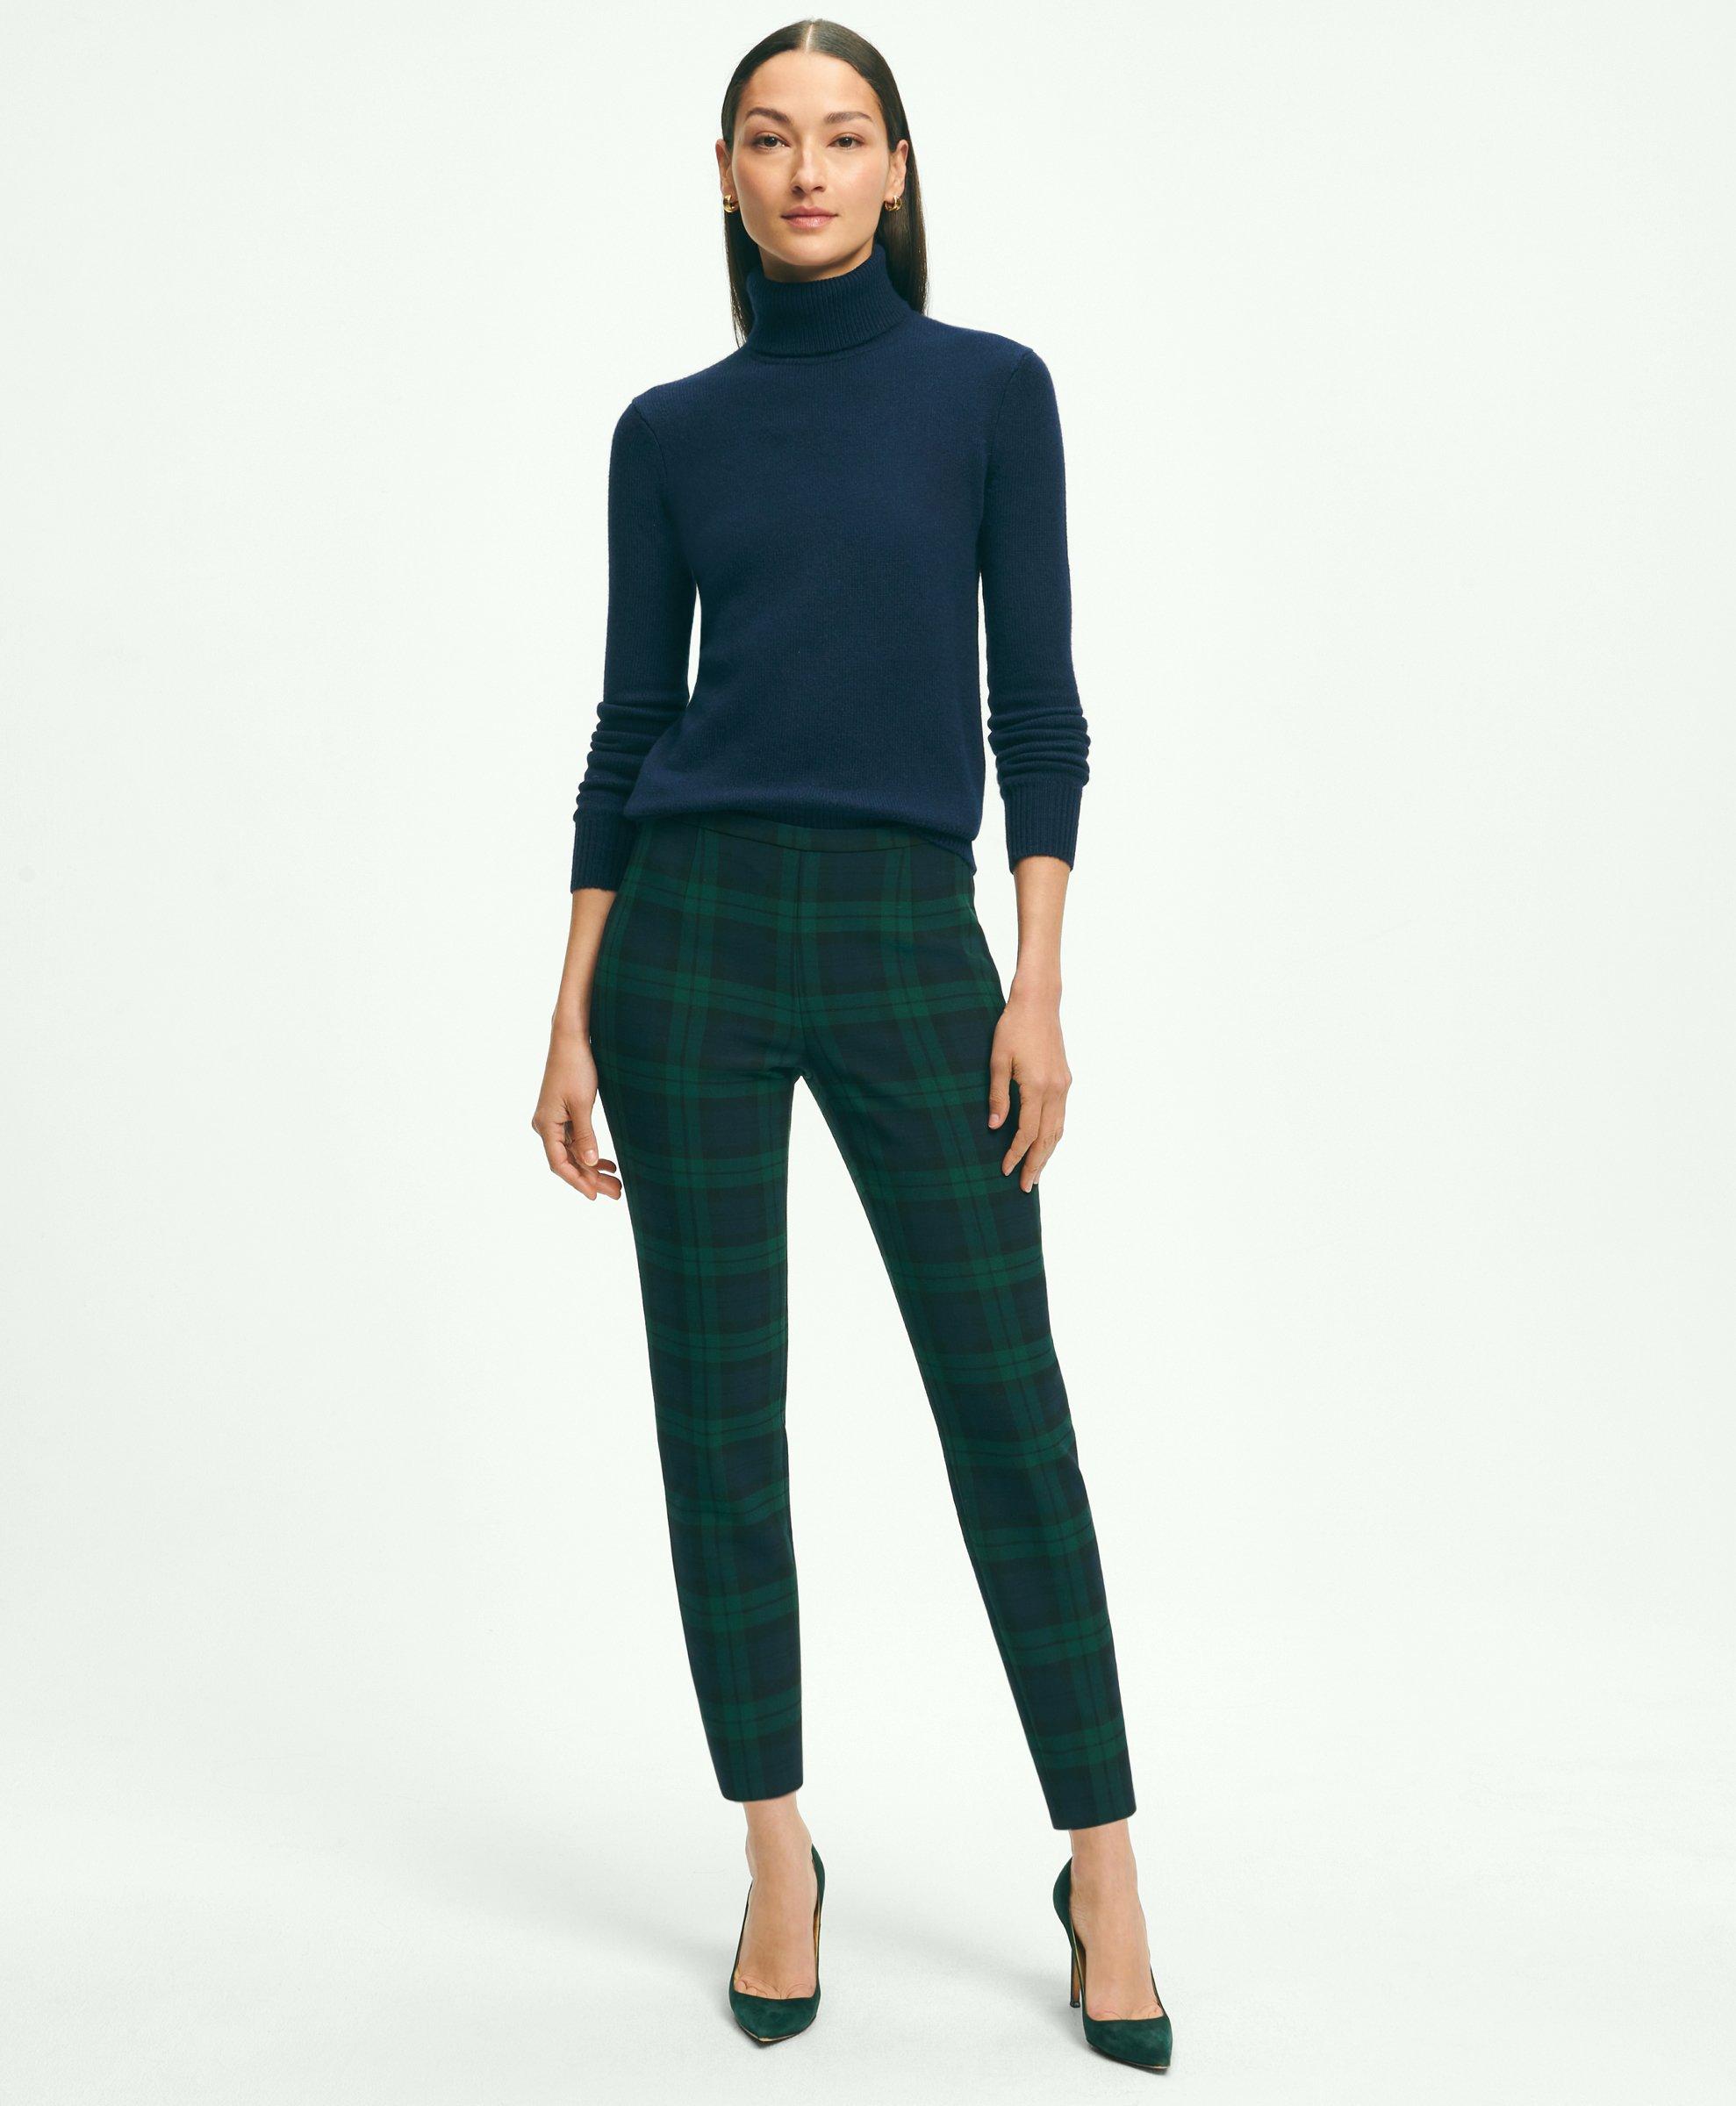 Ashford & Brooks Women's Woven Short Sleeve Shirt and Pajama Pants Set,  Green Blackwatch, XL